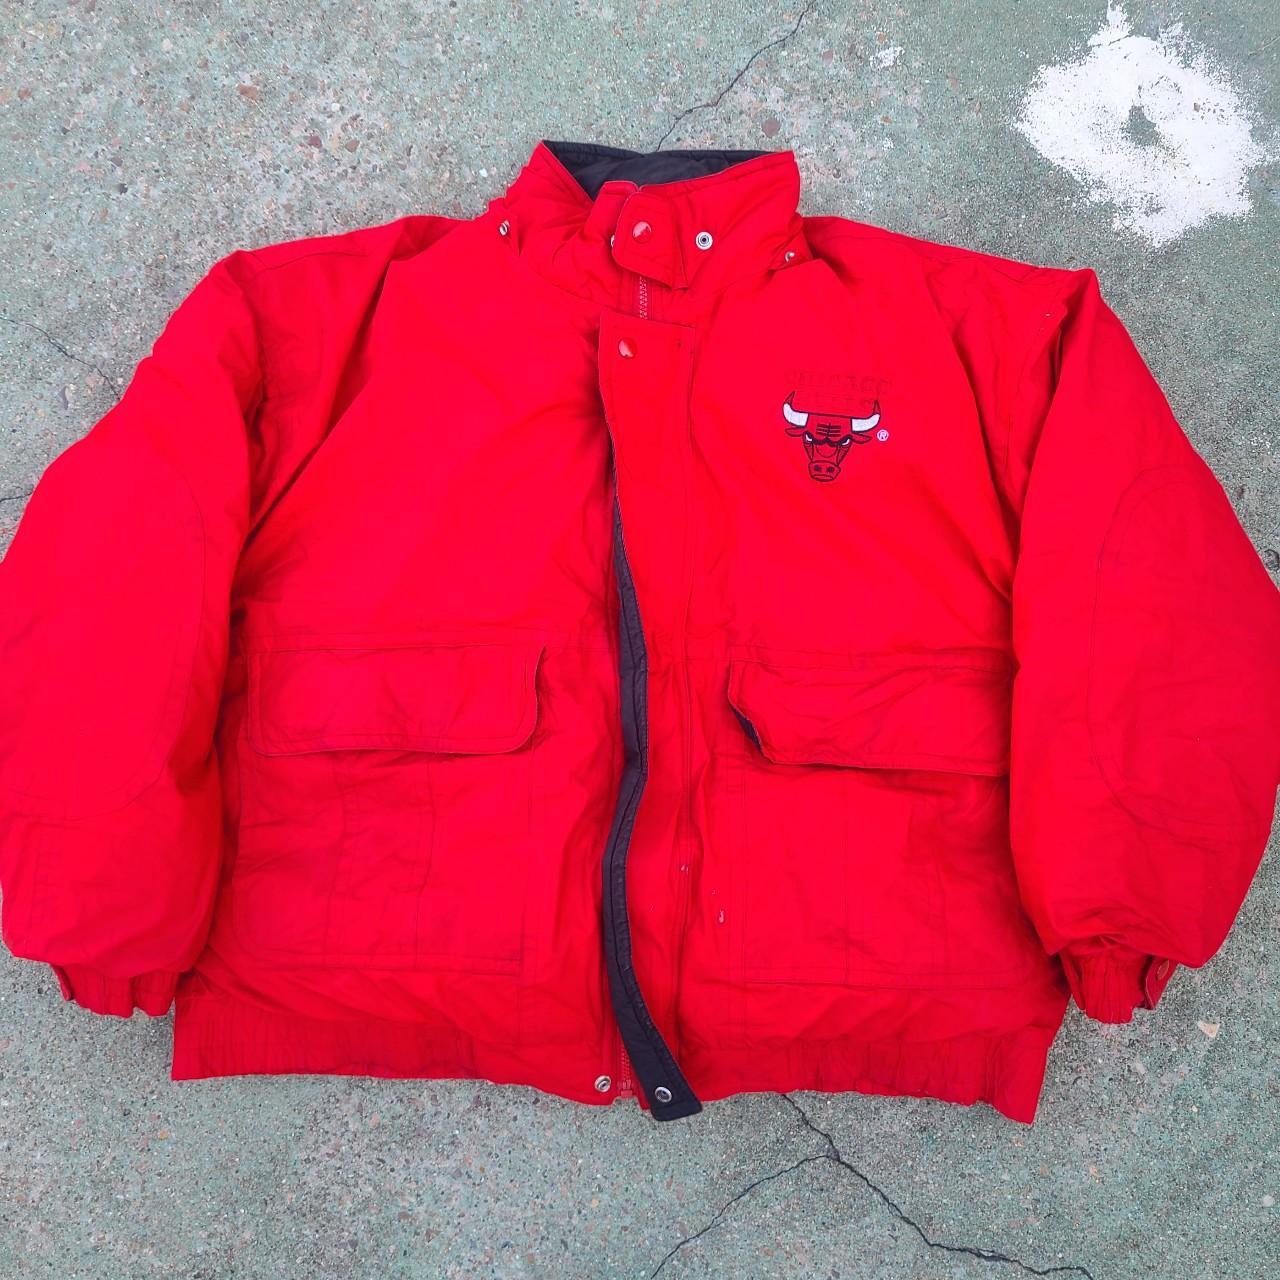 Chalk Line Men's Jacket - Red - XL